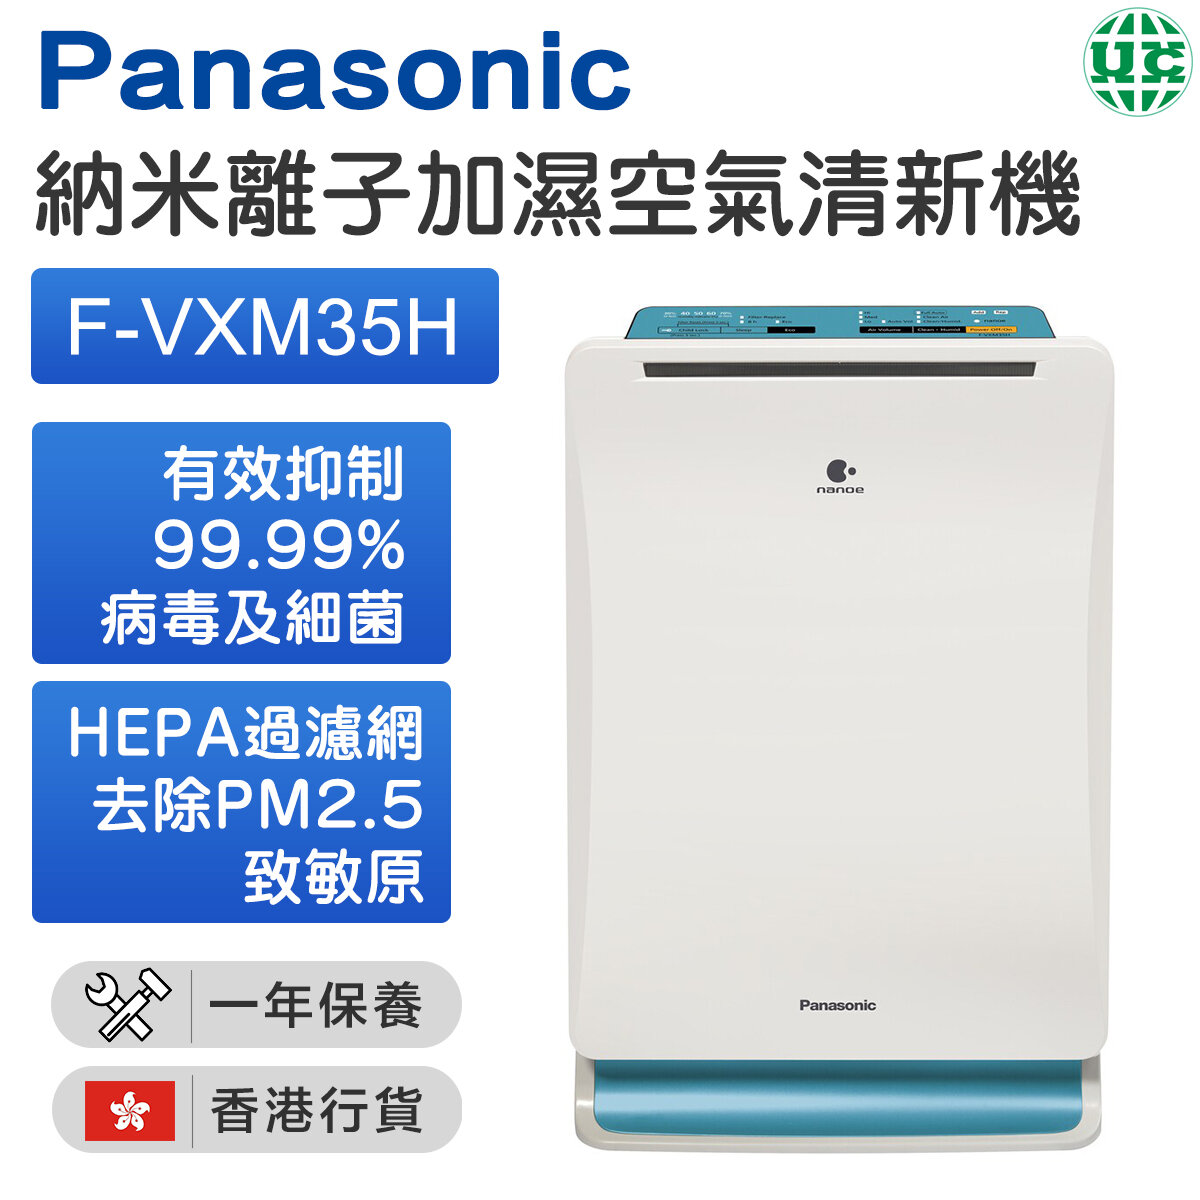 F-VXM35H Nano Ionic Air Purifier (280ft²) ramdom colour 【Hong Kong License】